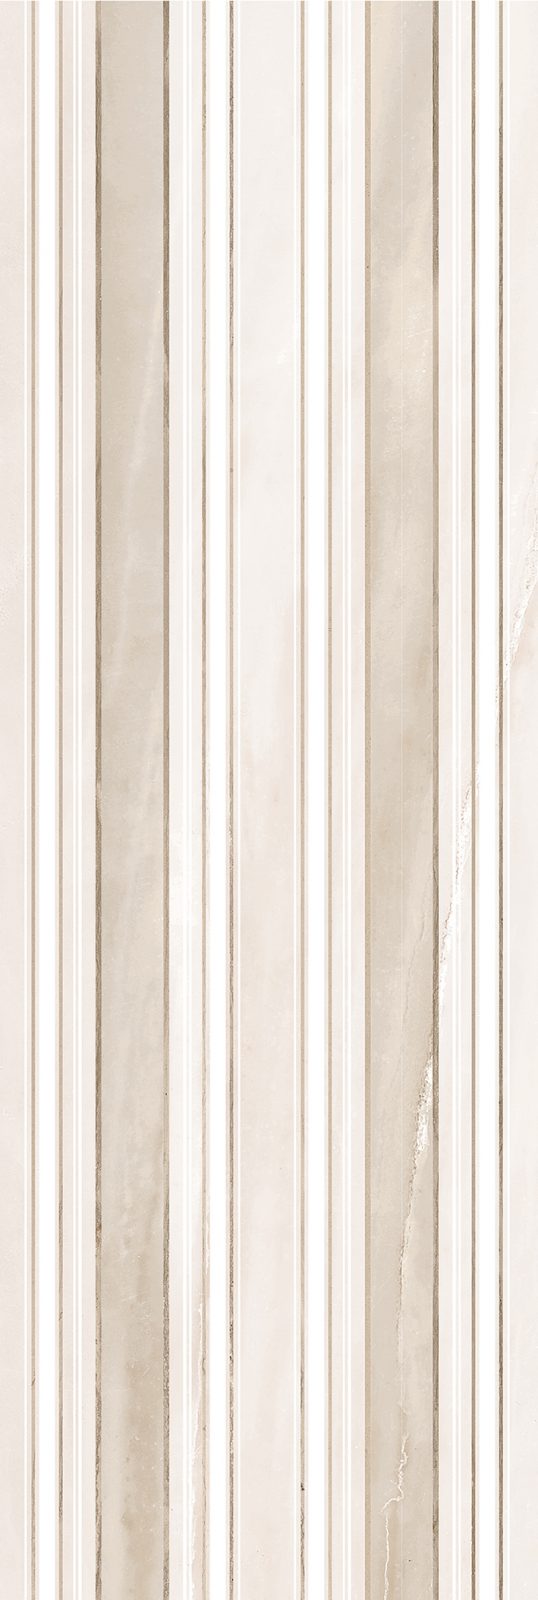 Tender Marble Декор полоски бежевый 1064-0040 20×60